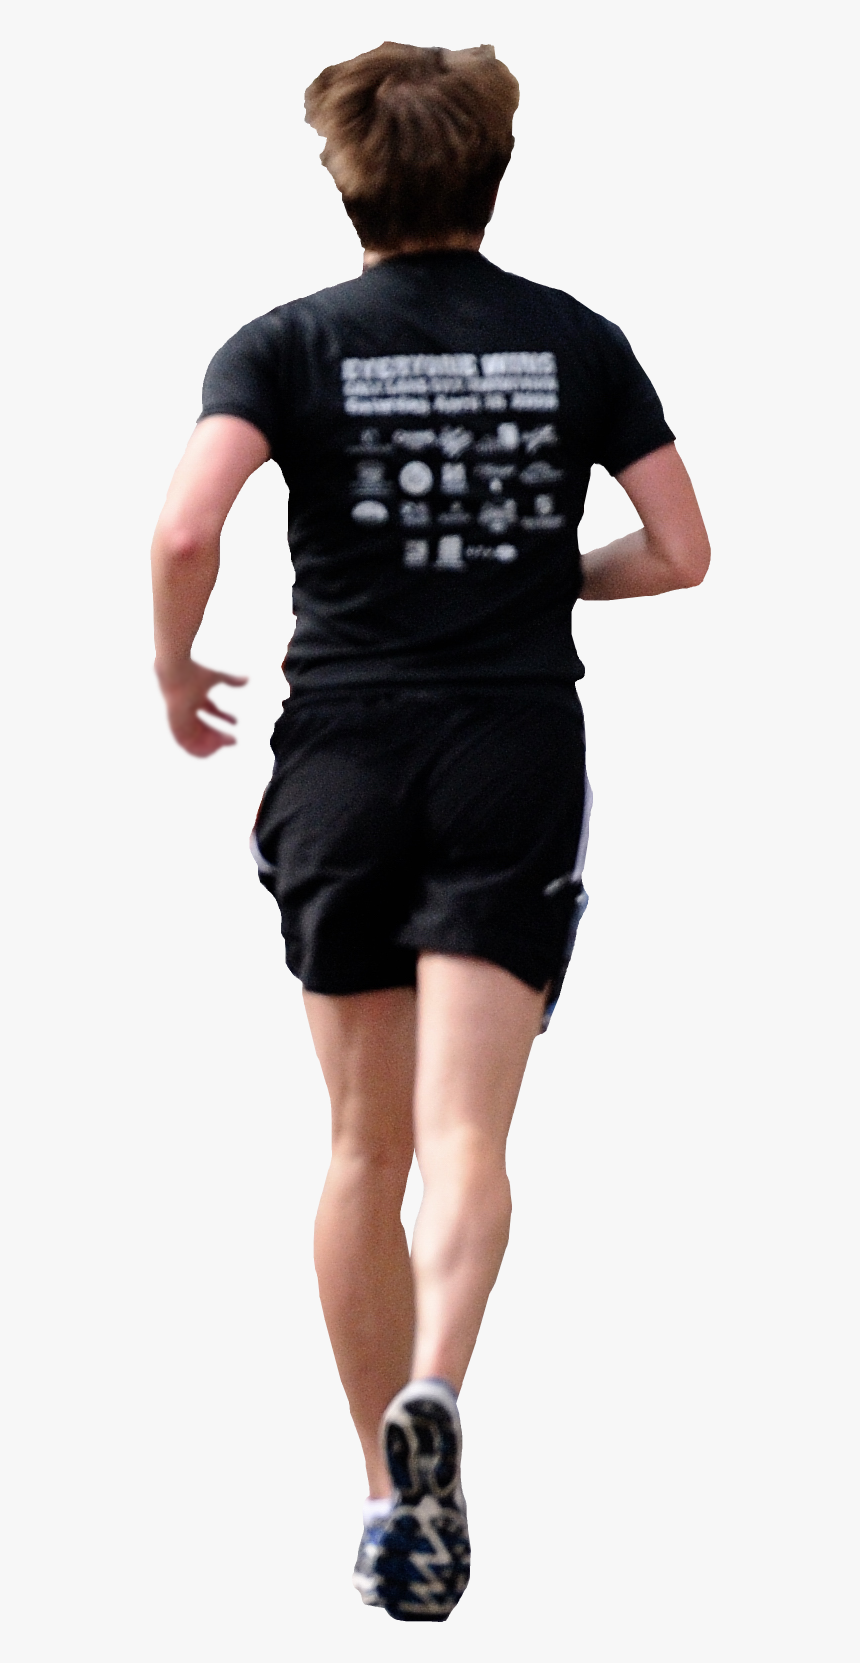 Jogging Man Png Image - Running Man Back Png, Transparent Png, Free Download